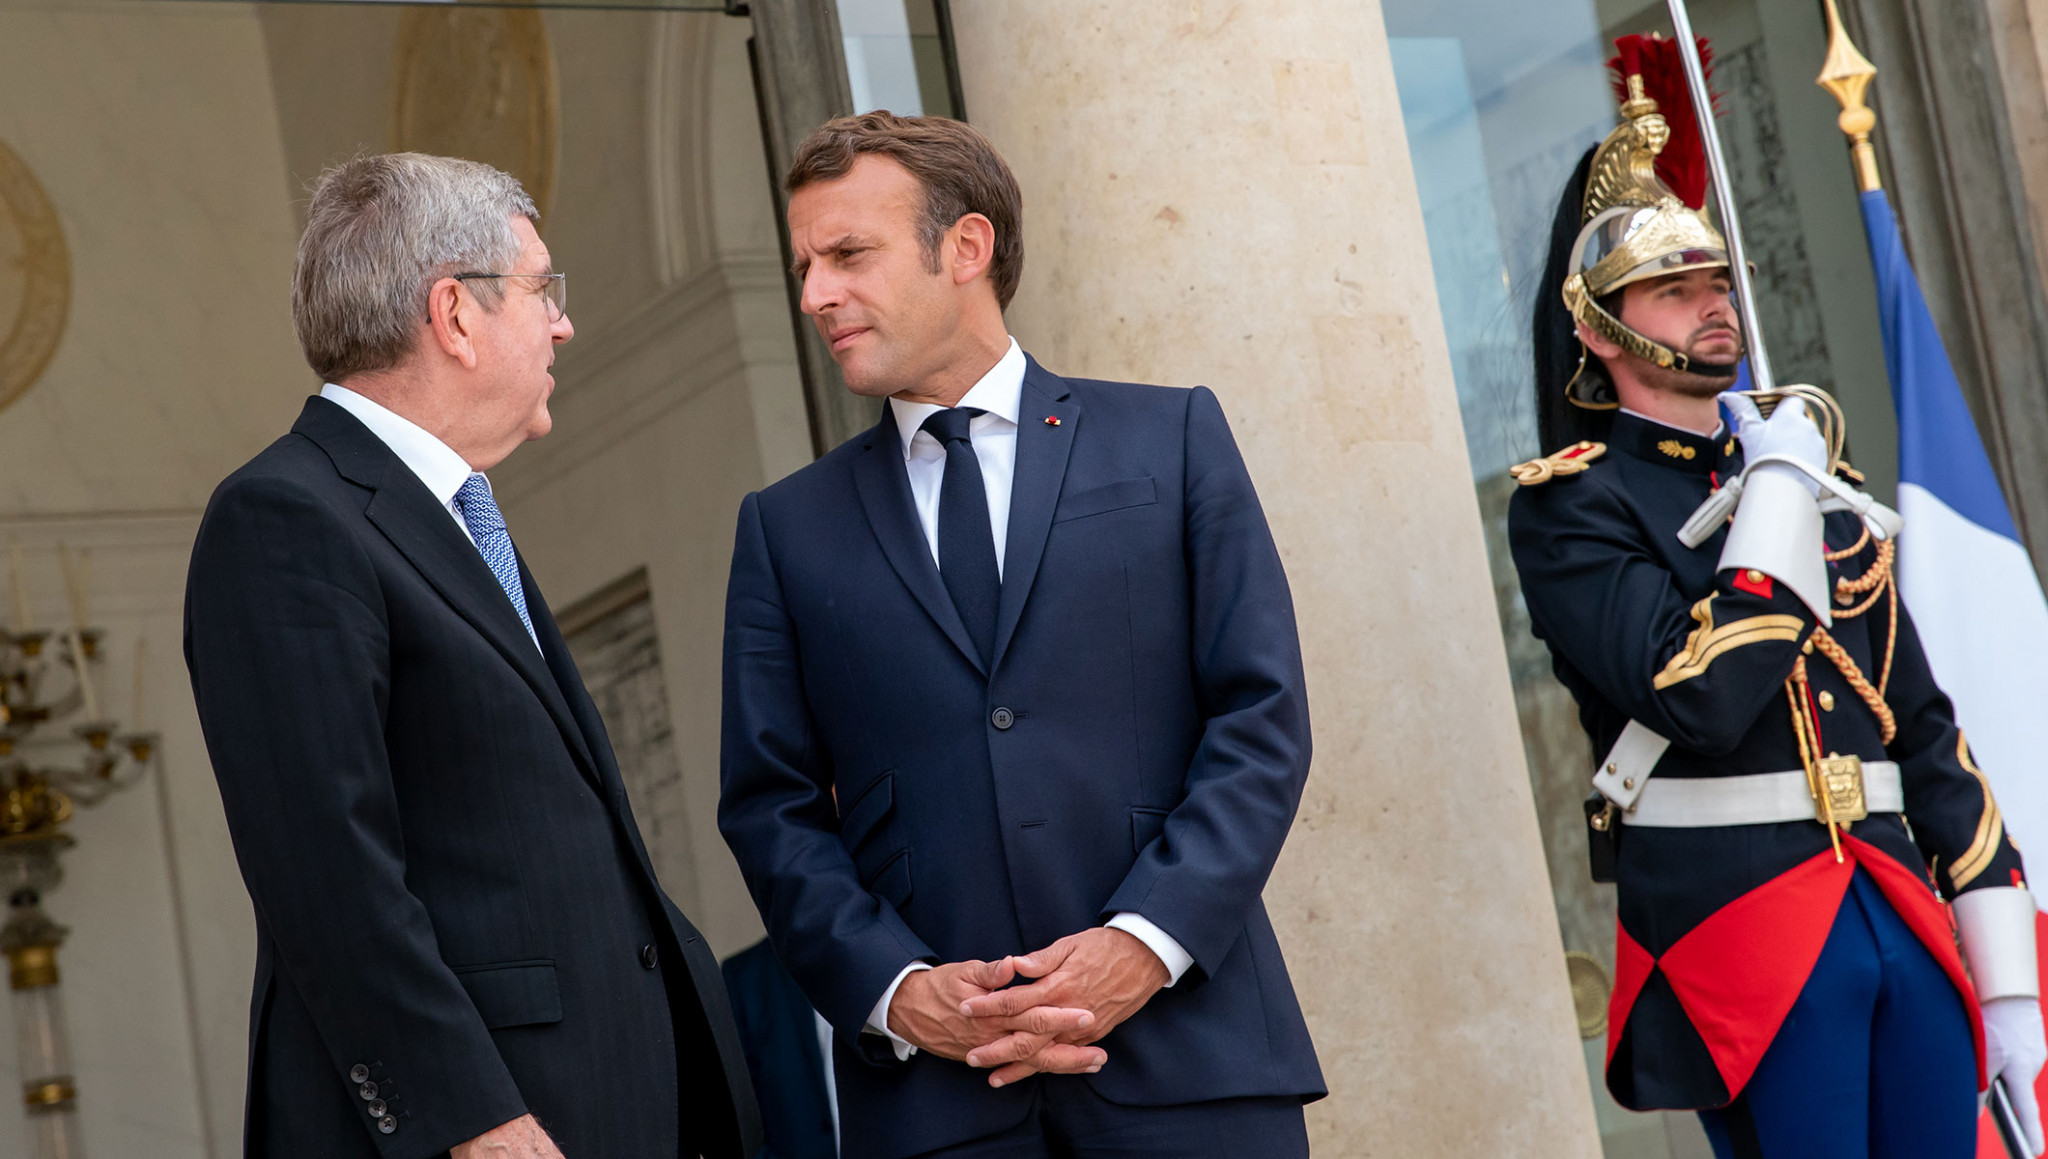 Paris 2024 and coronavirus on agenda as Macron welcomes Bach to Élysée Palace